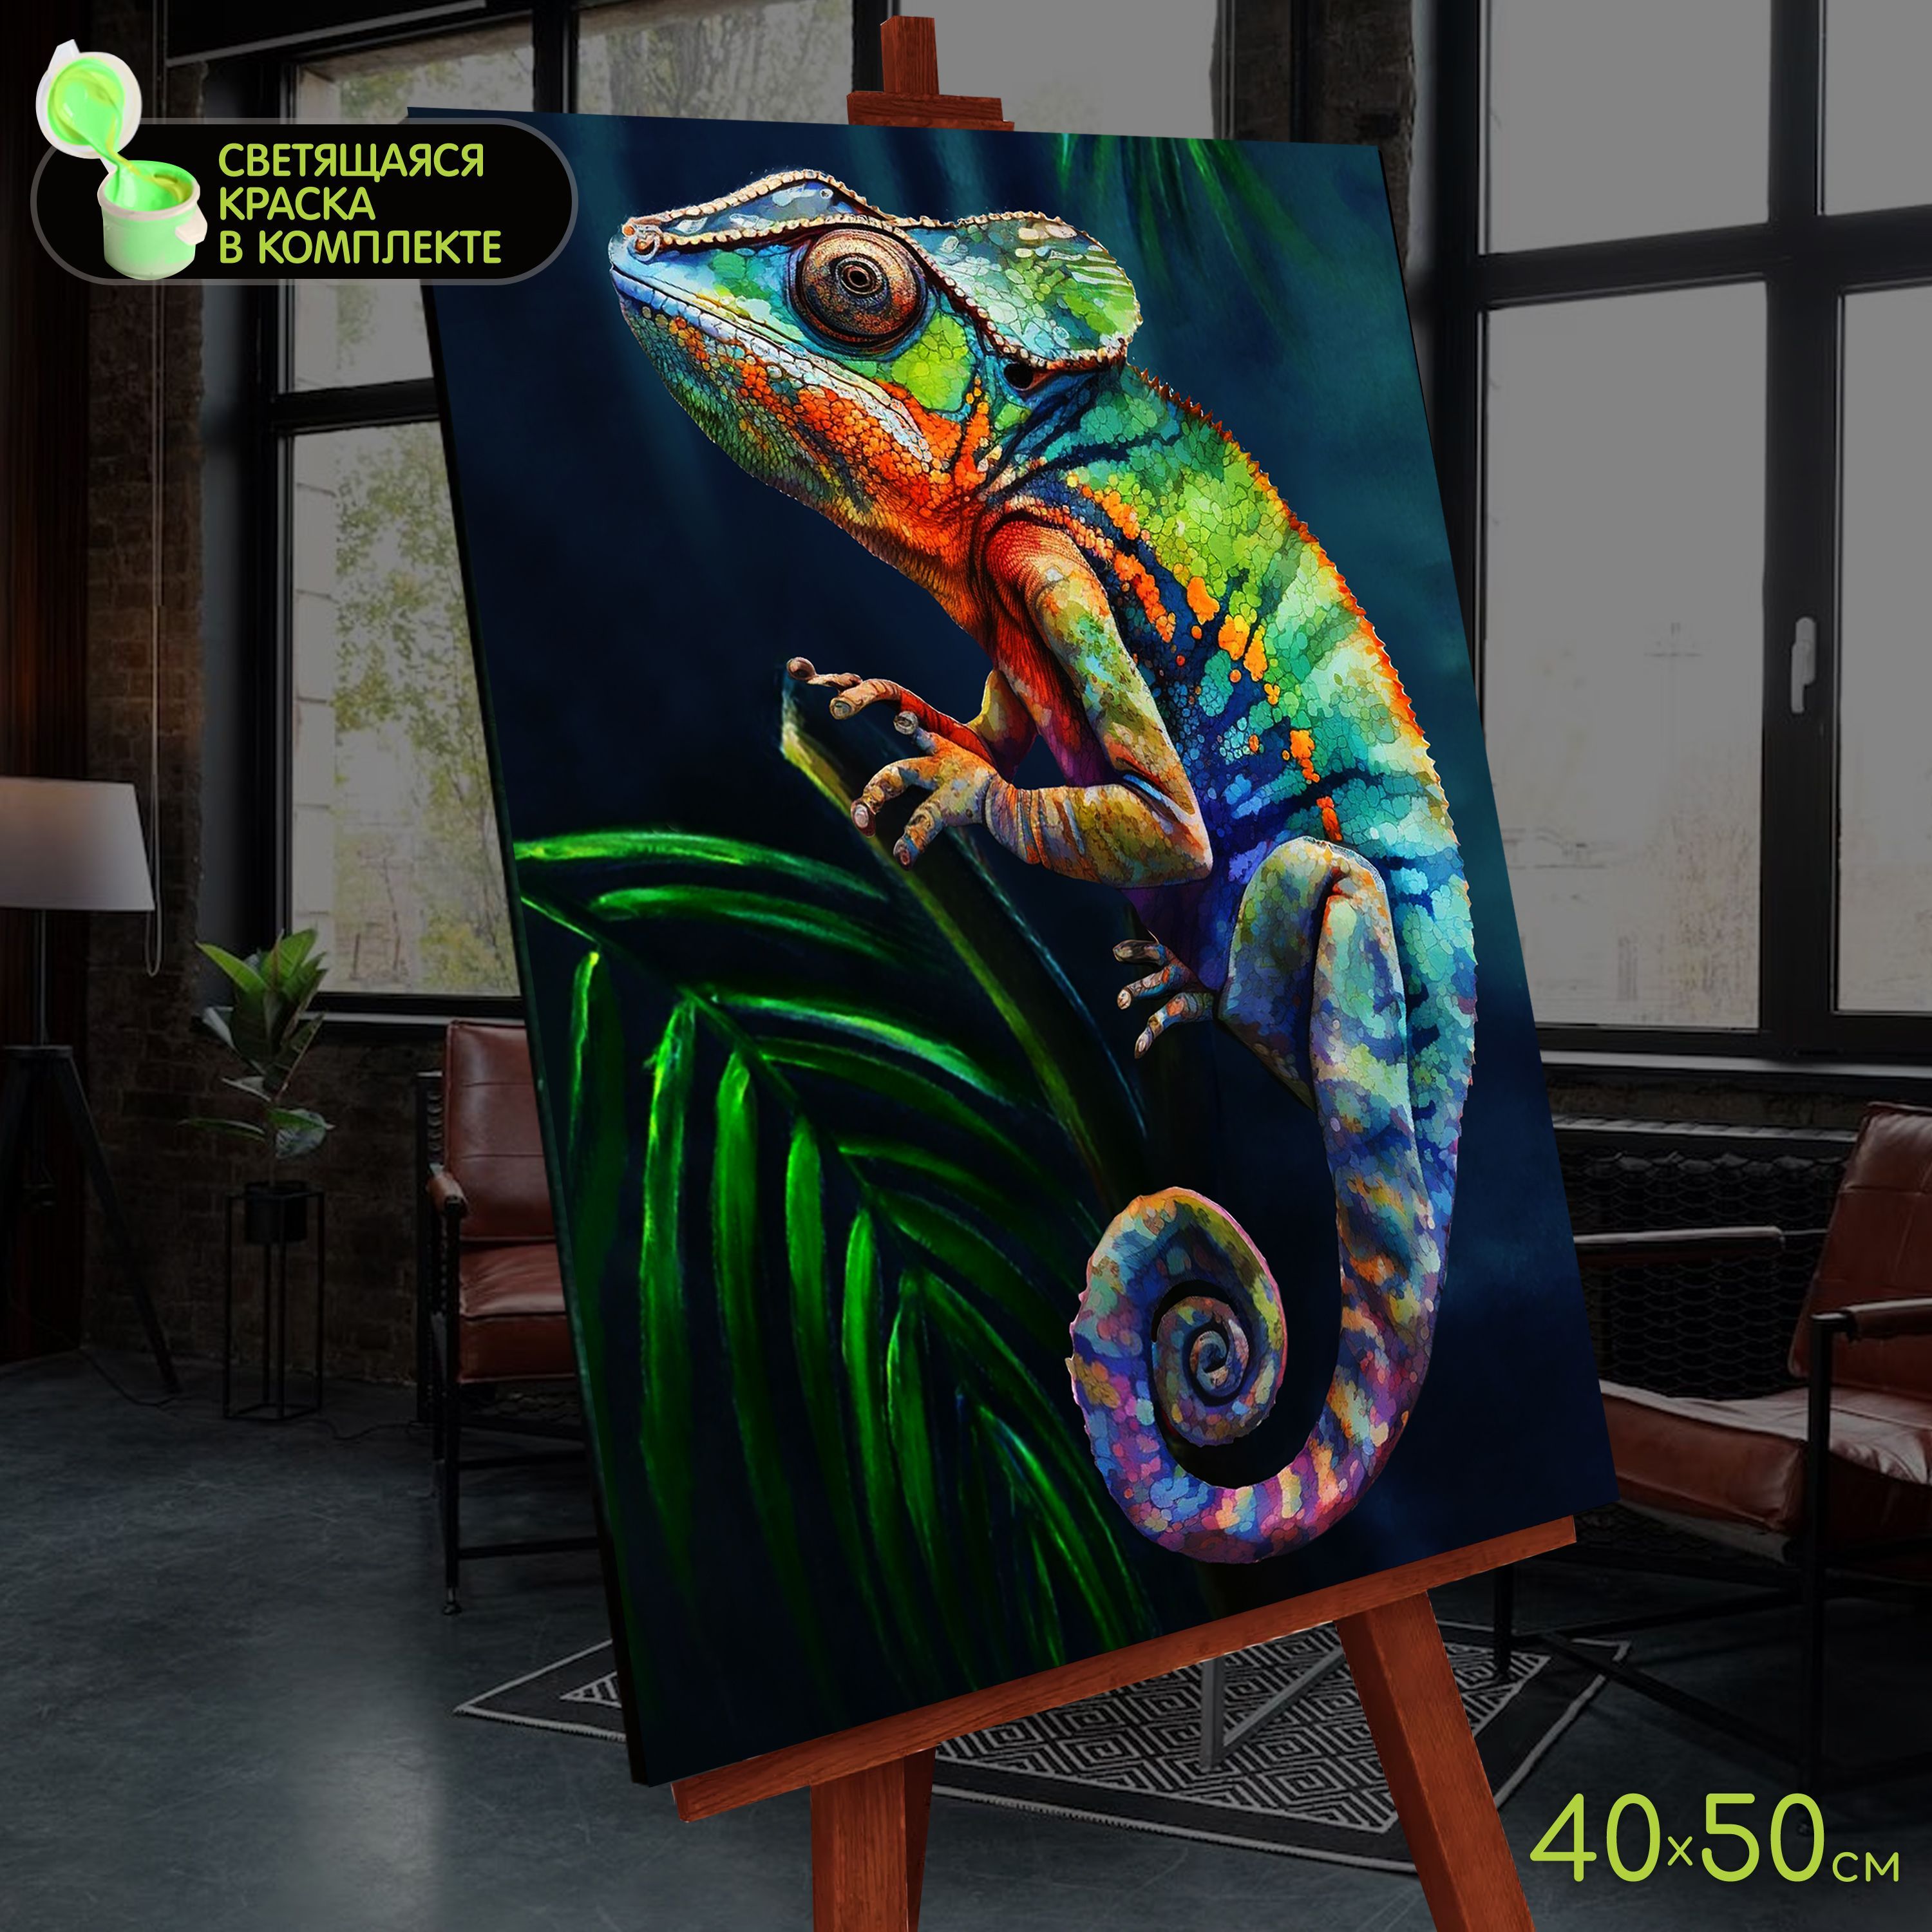 Картина по номерам со светящейся краской 40х50 "хамелеон" (26 цветов) fhr0578. Хамелеон картина. Картина по номерам со светящейся краской. Картина по номерам со светящейся краской хамелеон. Fhr0578.